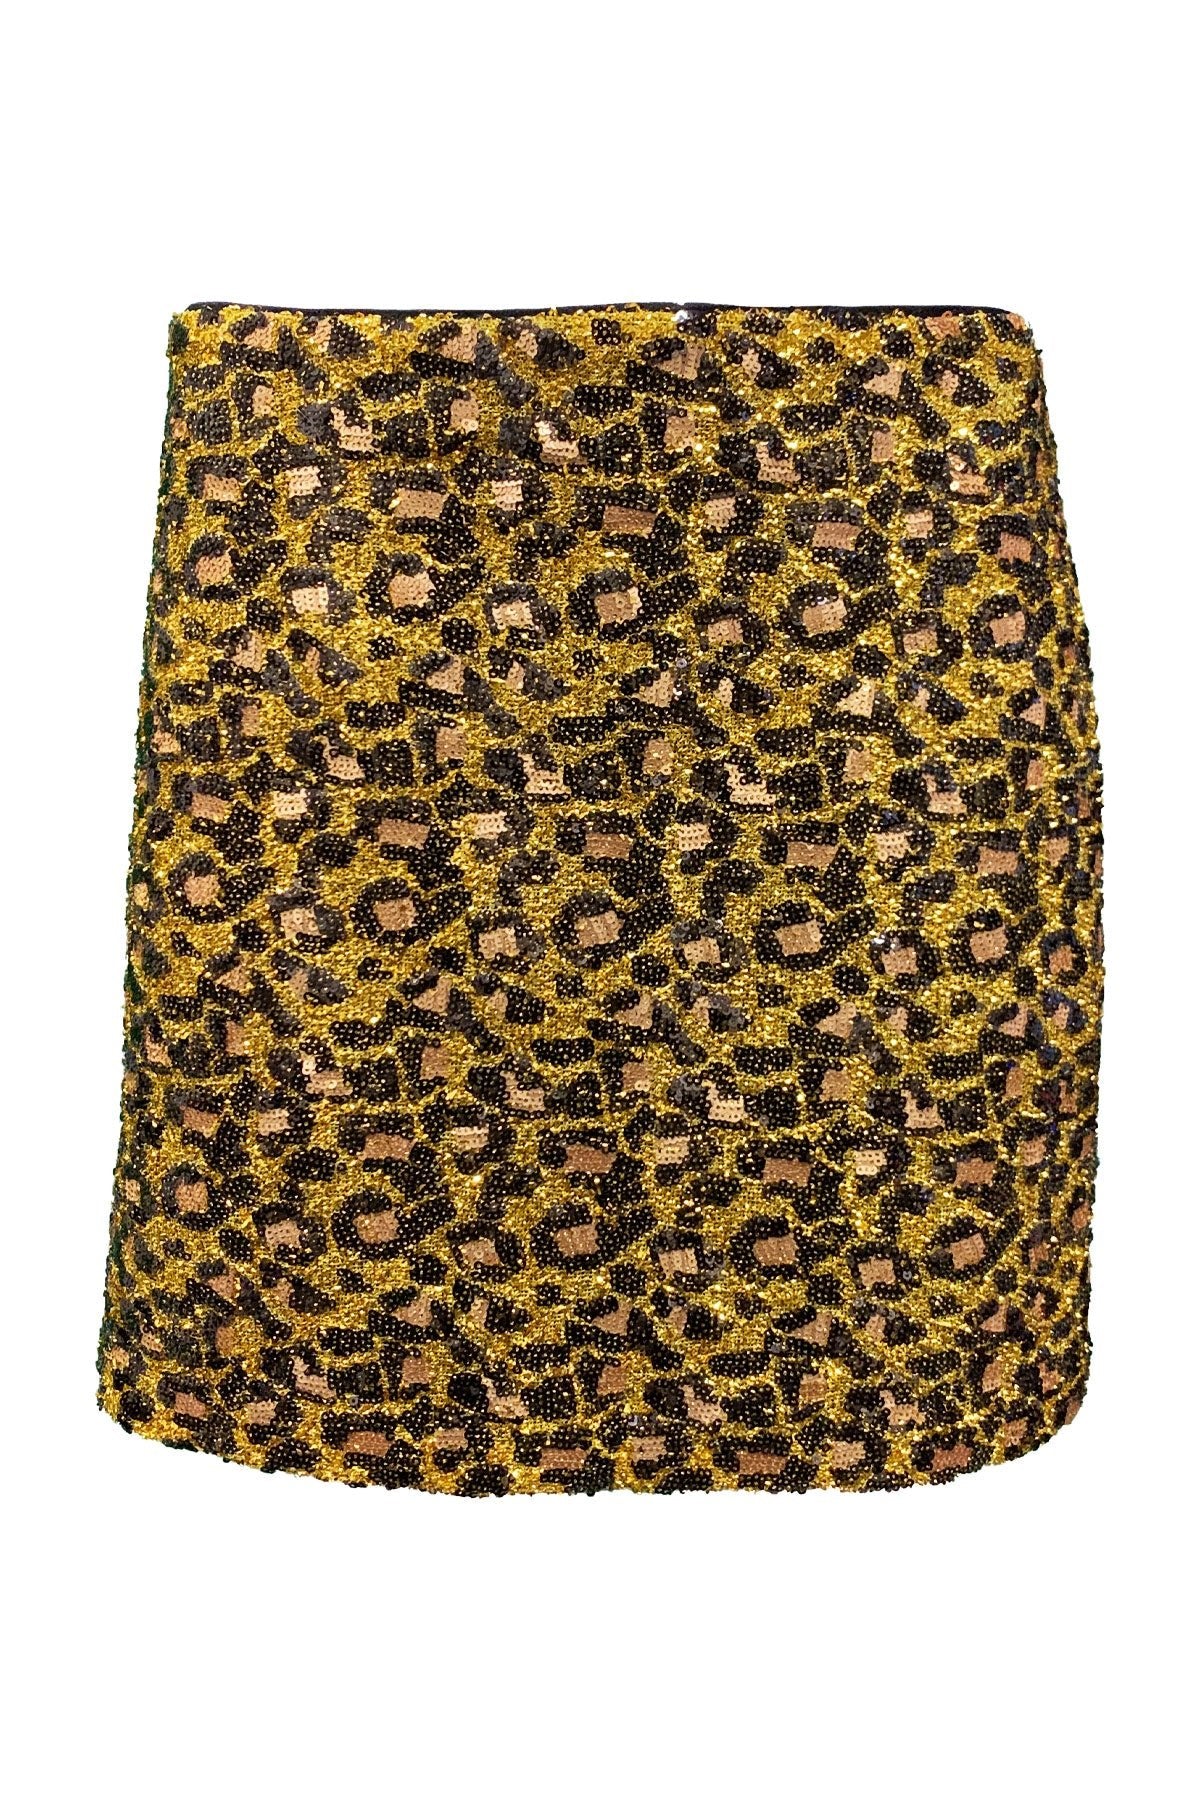 Raspy Sequin Leopard Skirt - shop-olivia.com